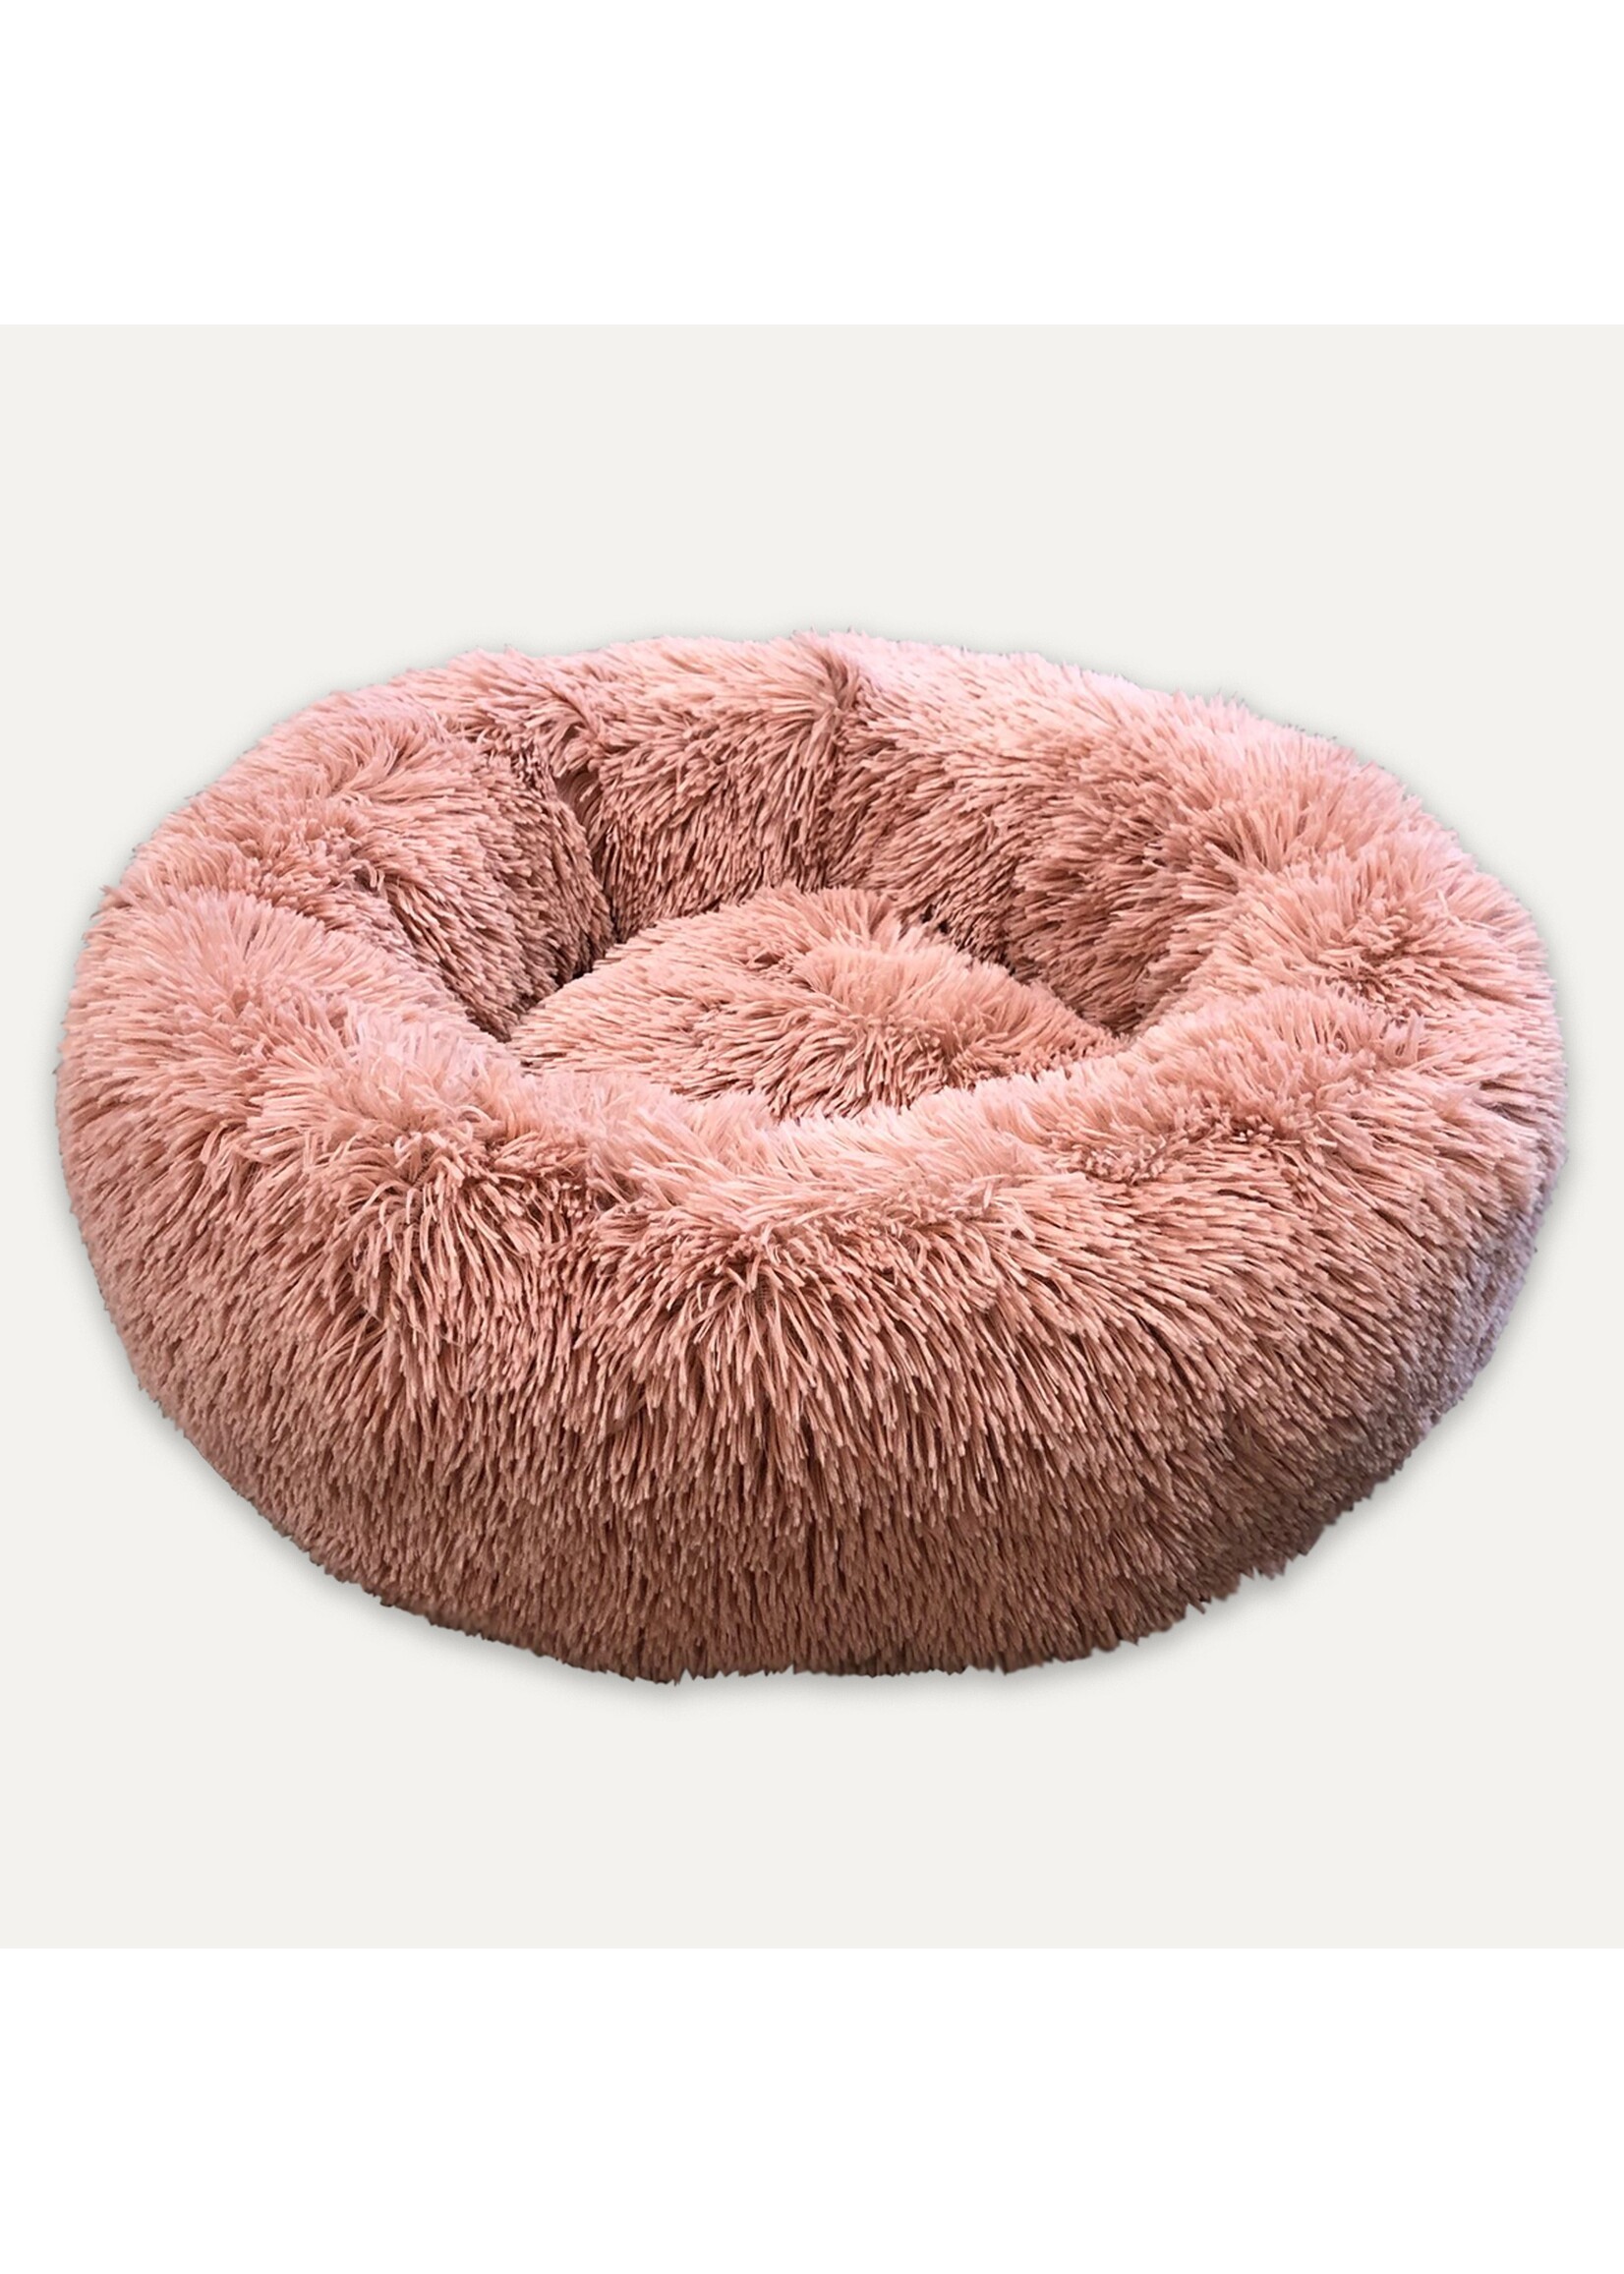 Gooeez Goo-eez Plush Ultra Soft Pet Bed